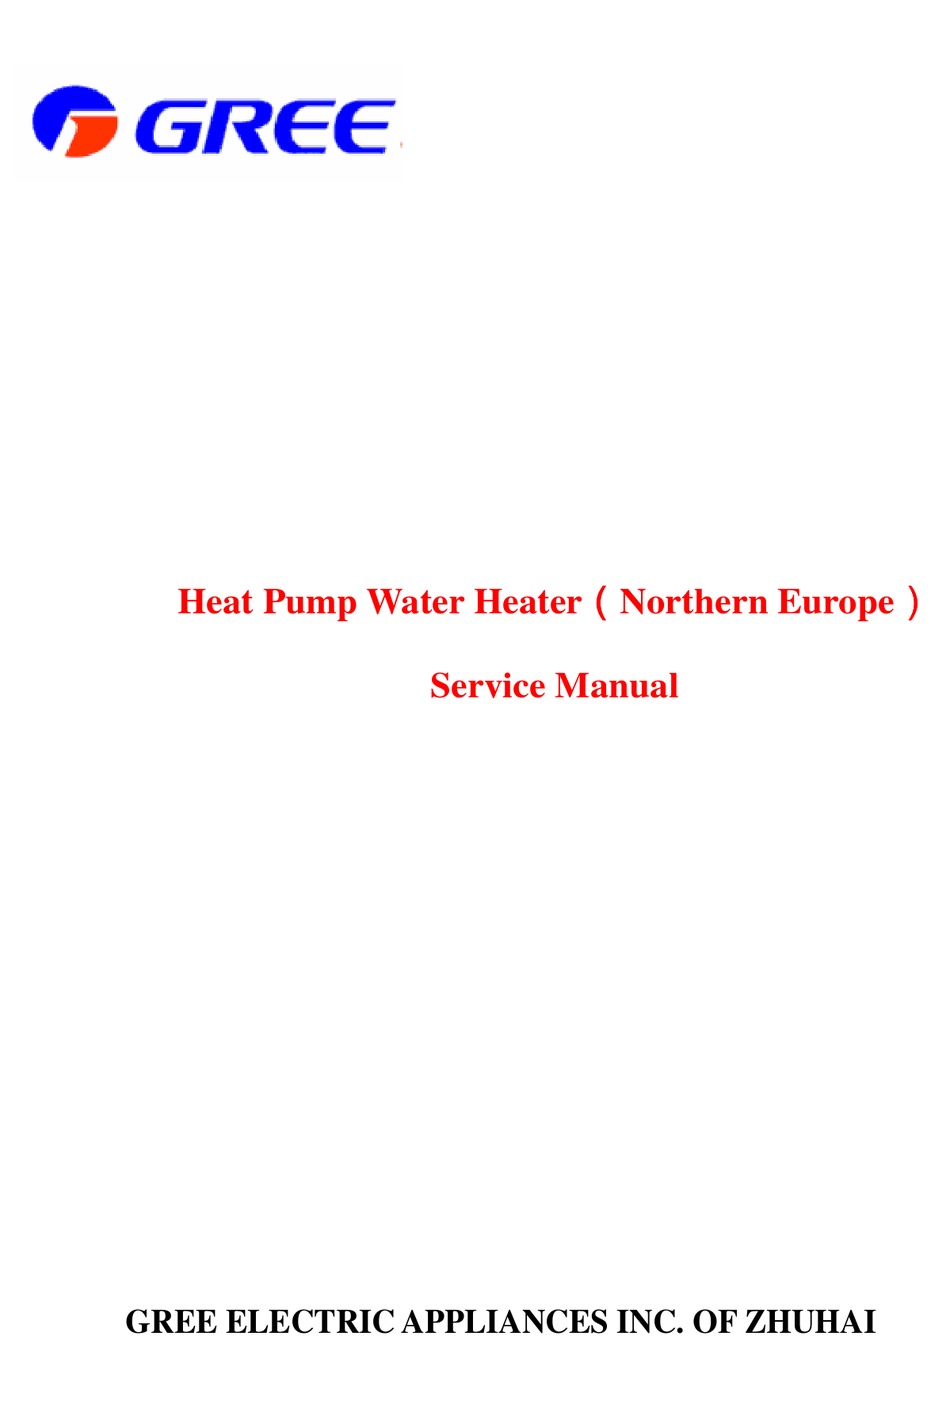 GREE HEAT PUMP WATER HEATER SERVICE MANUAL Pdf Download ManualsLib